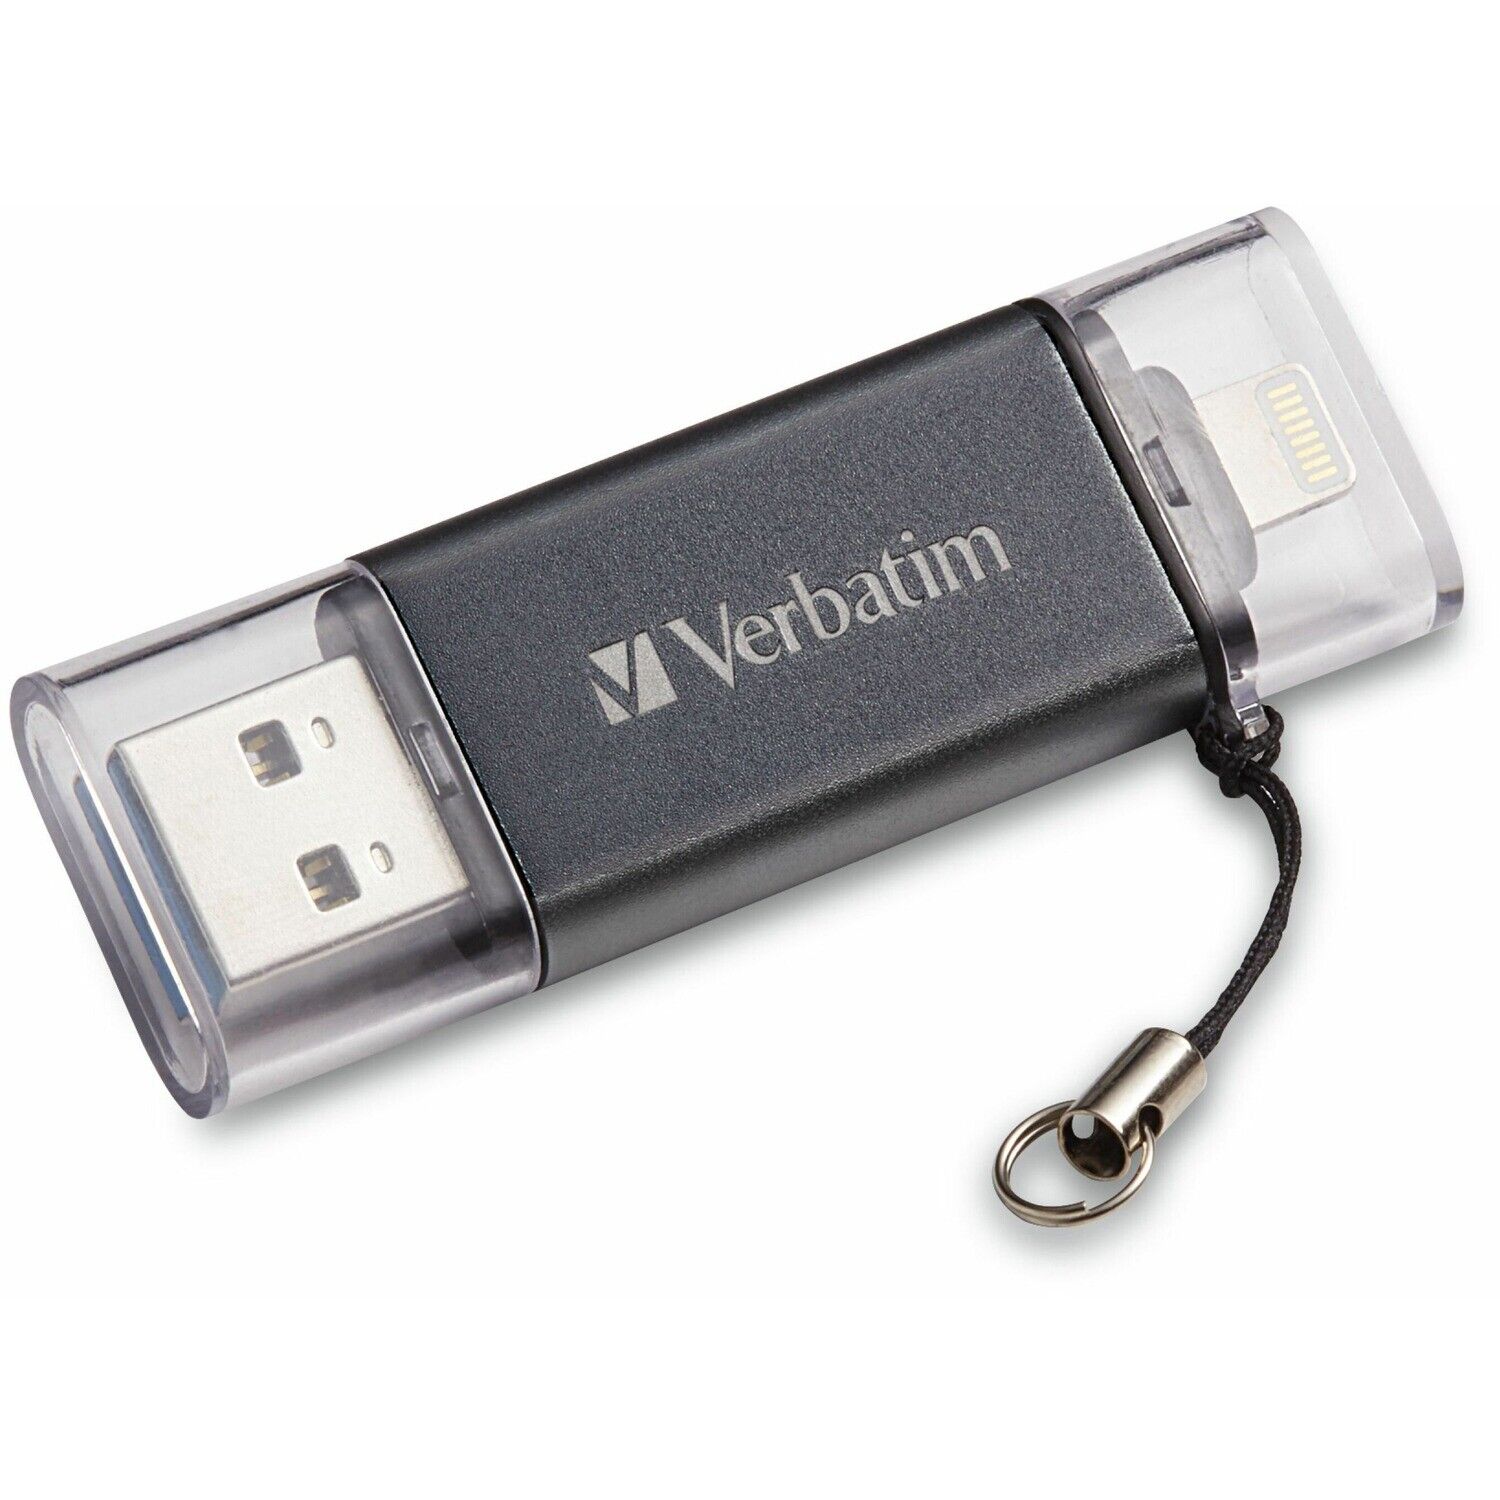 Verbatim Store-N-Go Dual USB 3.0 Flash Drive 32G Graphite 49300